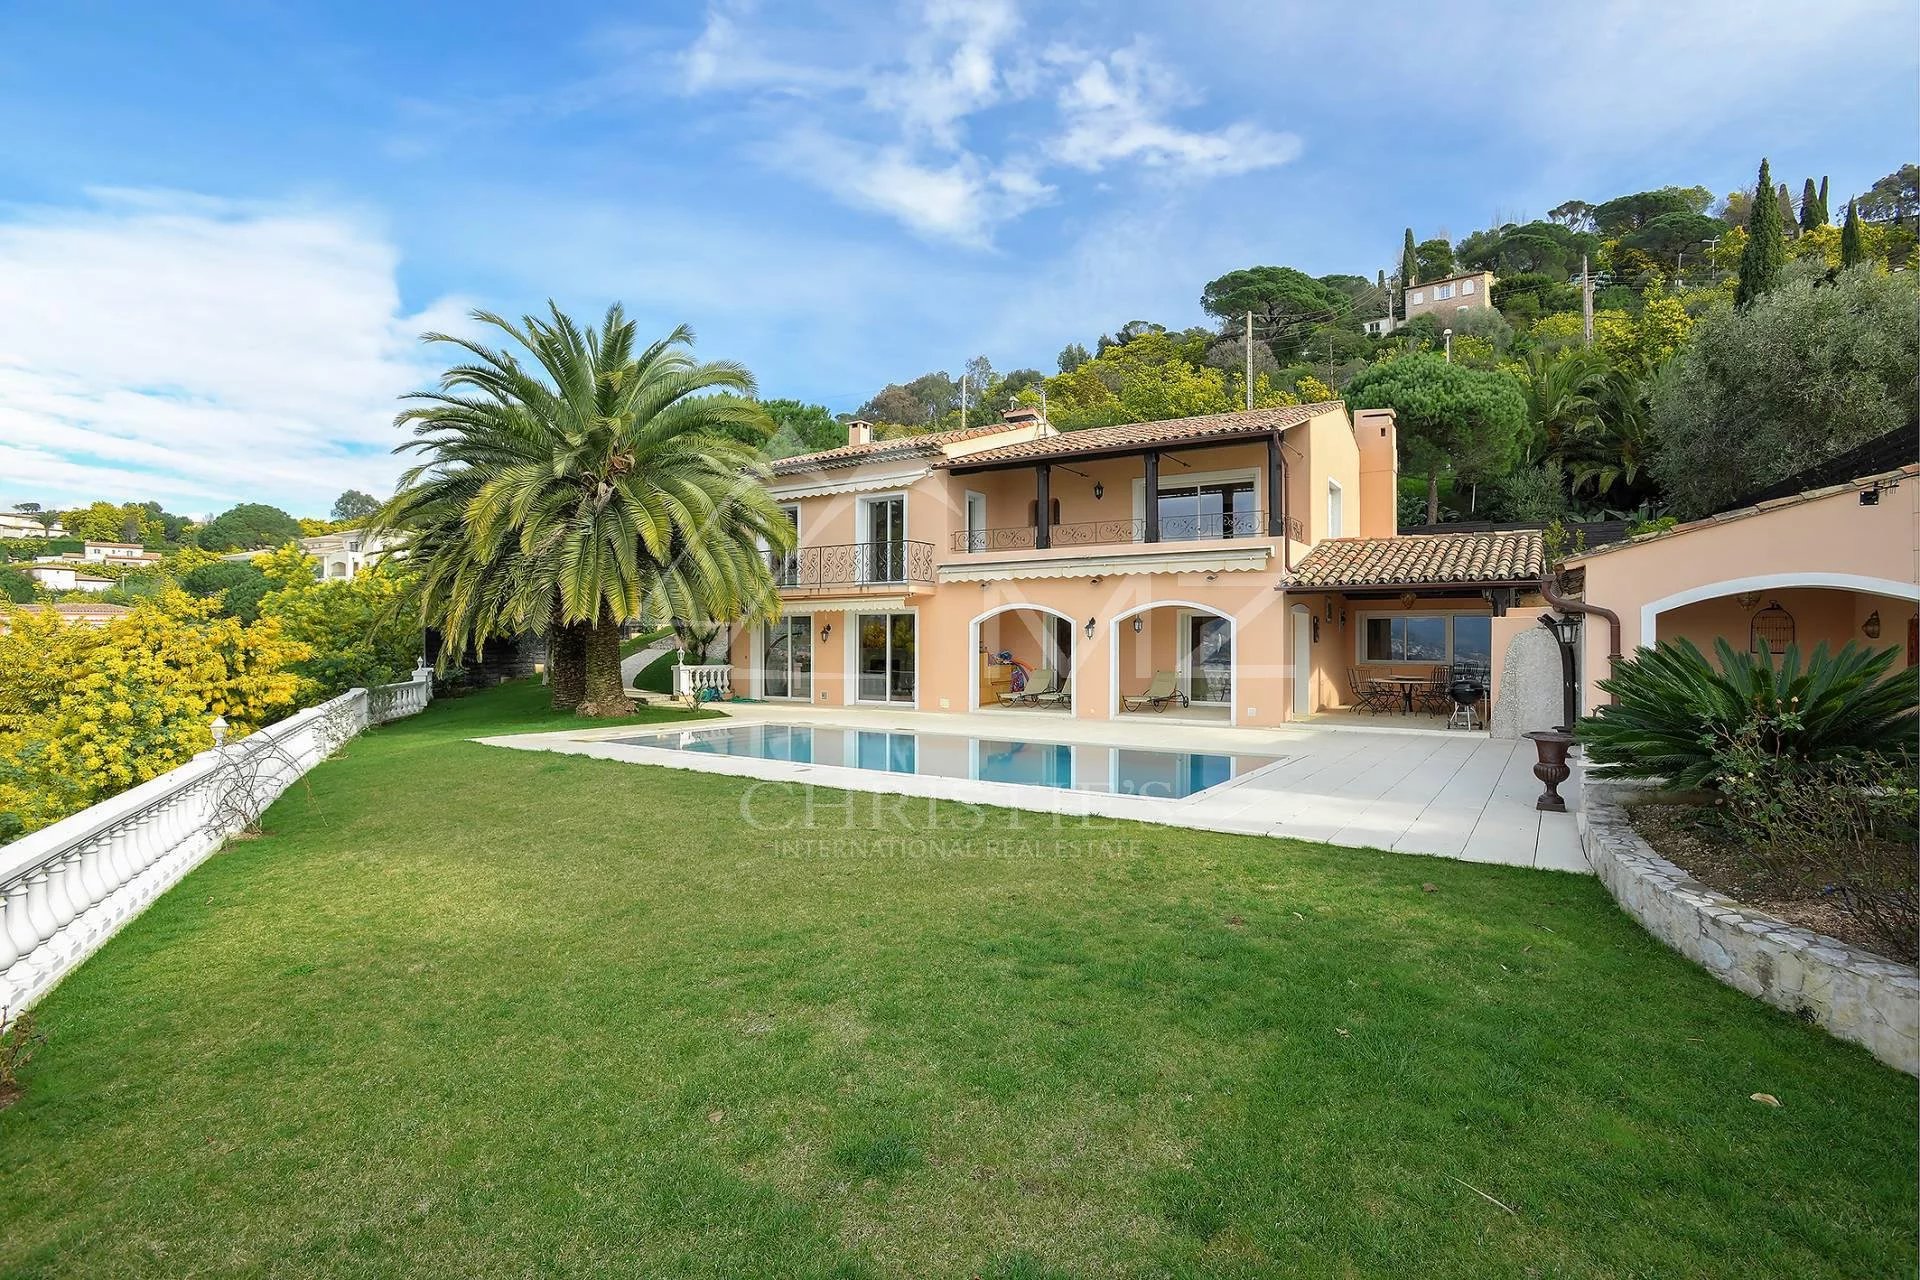 Cannes - Villa in ruhiger Lage mit Meerblick